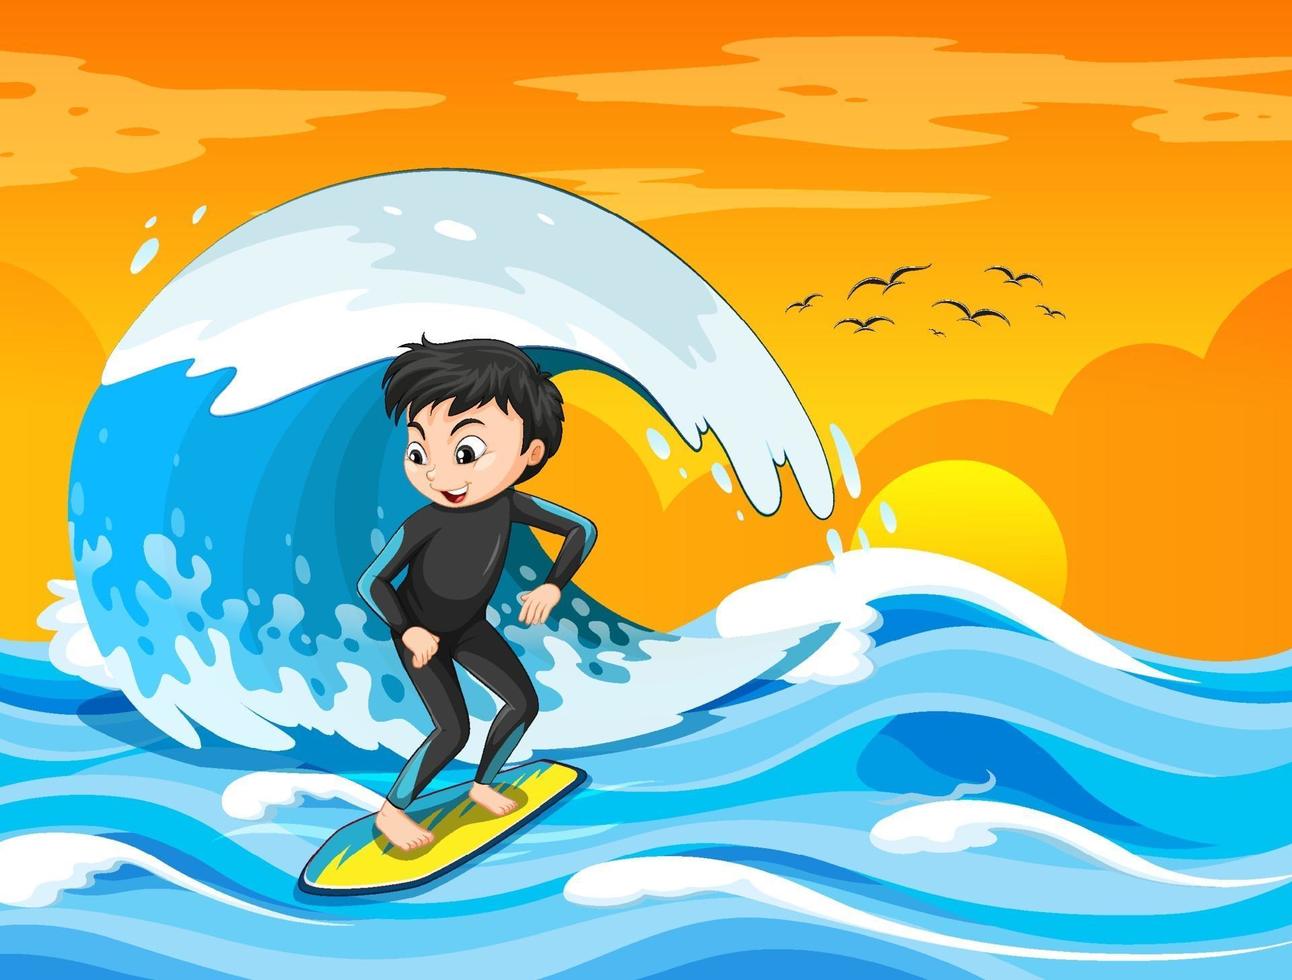 stor våg i havsscenen med pojke som står på en surfbräda vektor